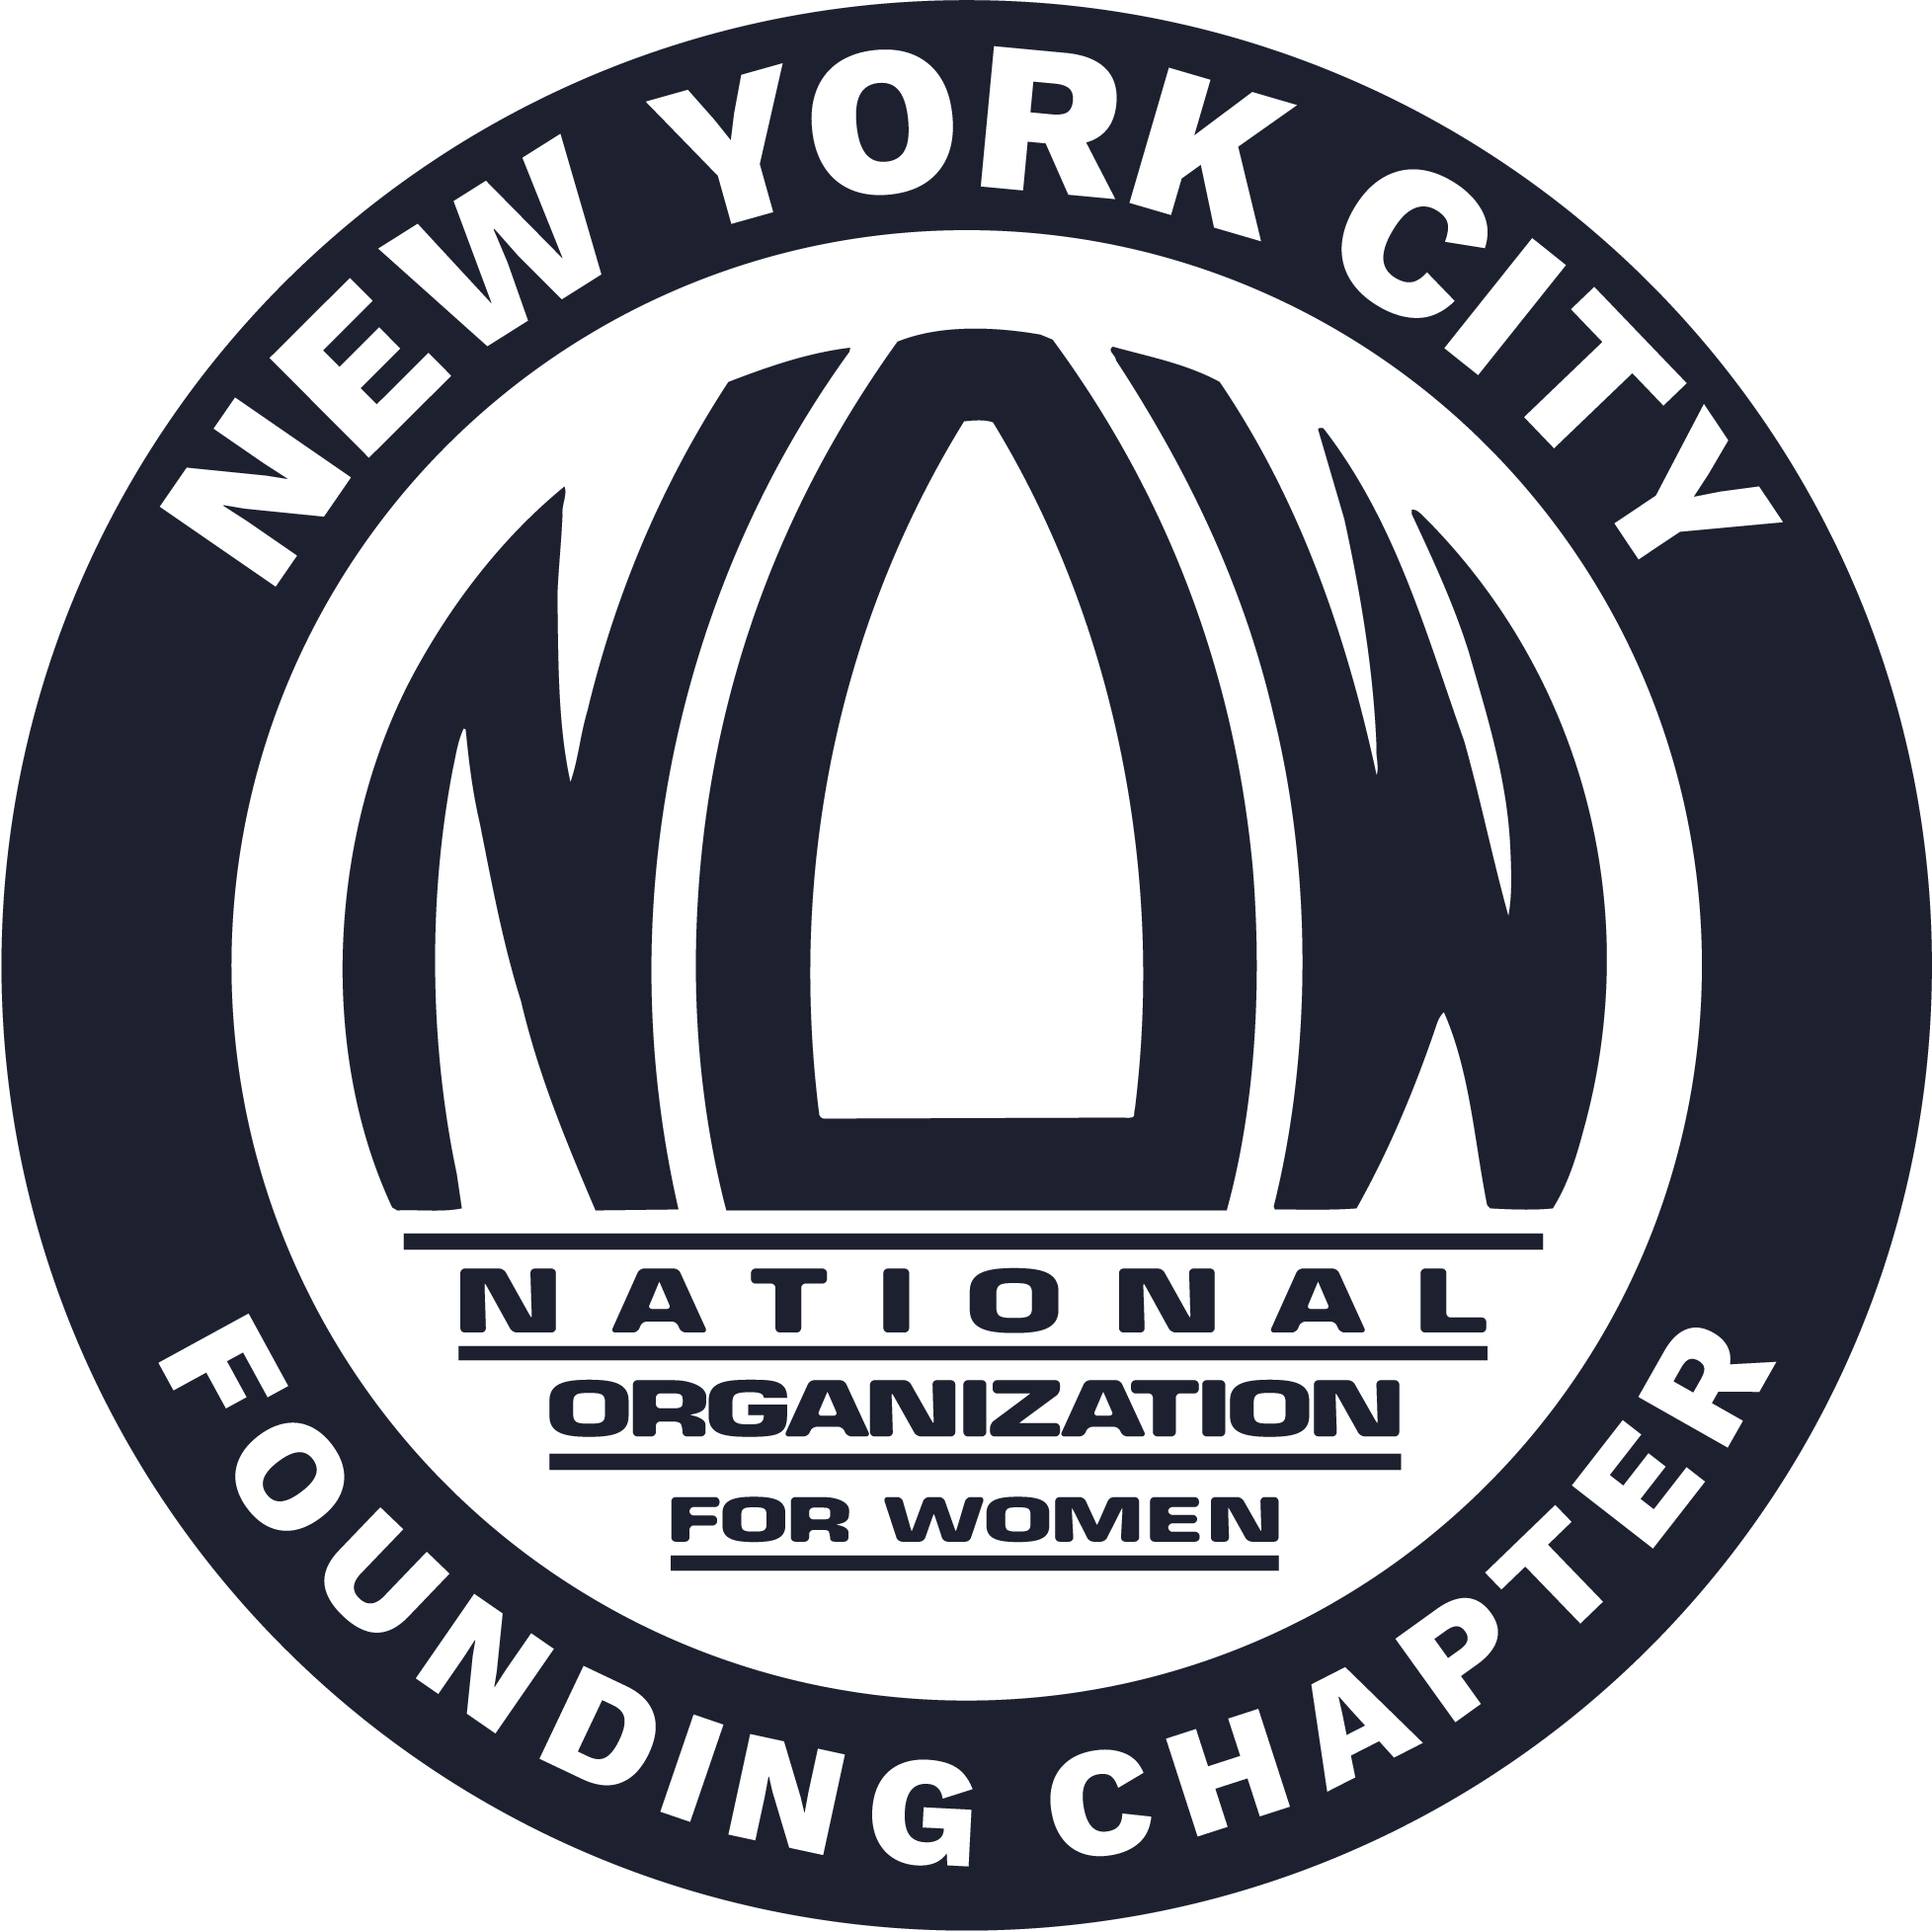 Woman Organization in New York New York - National Organization for Women New York City Founding Chapter